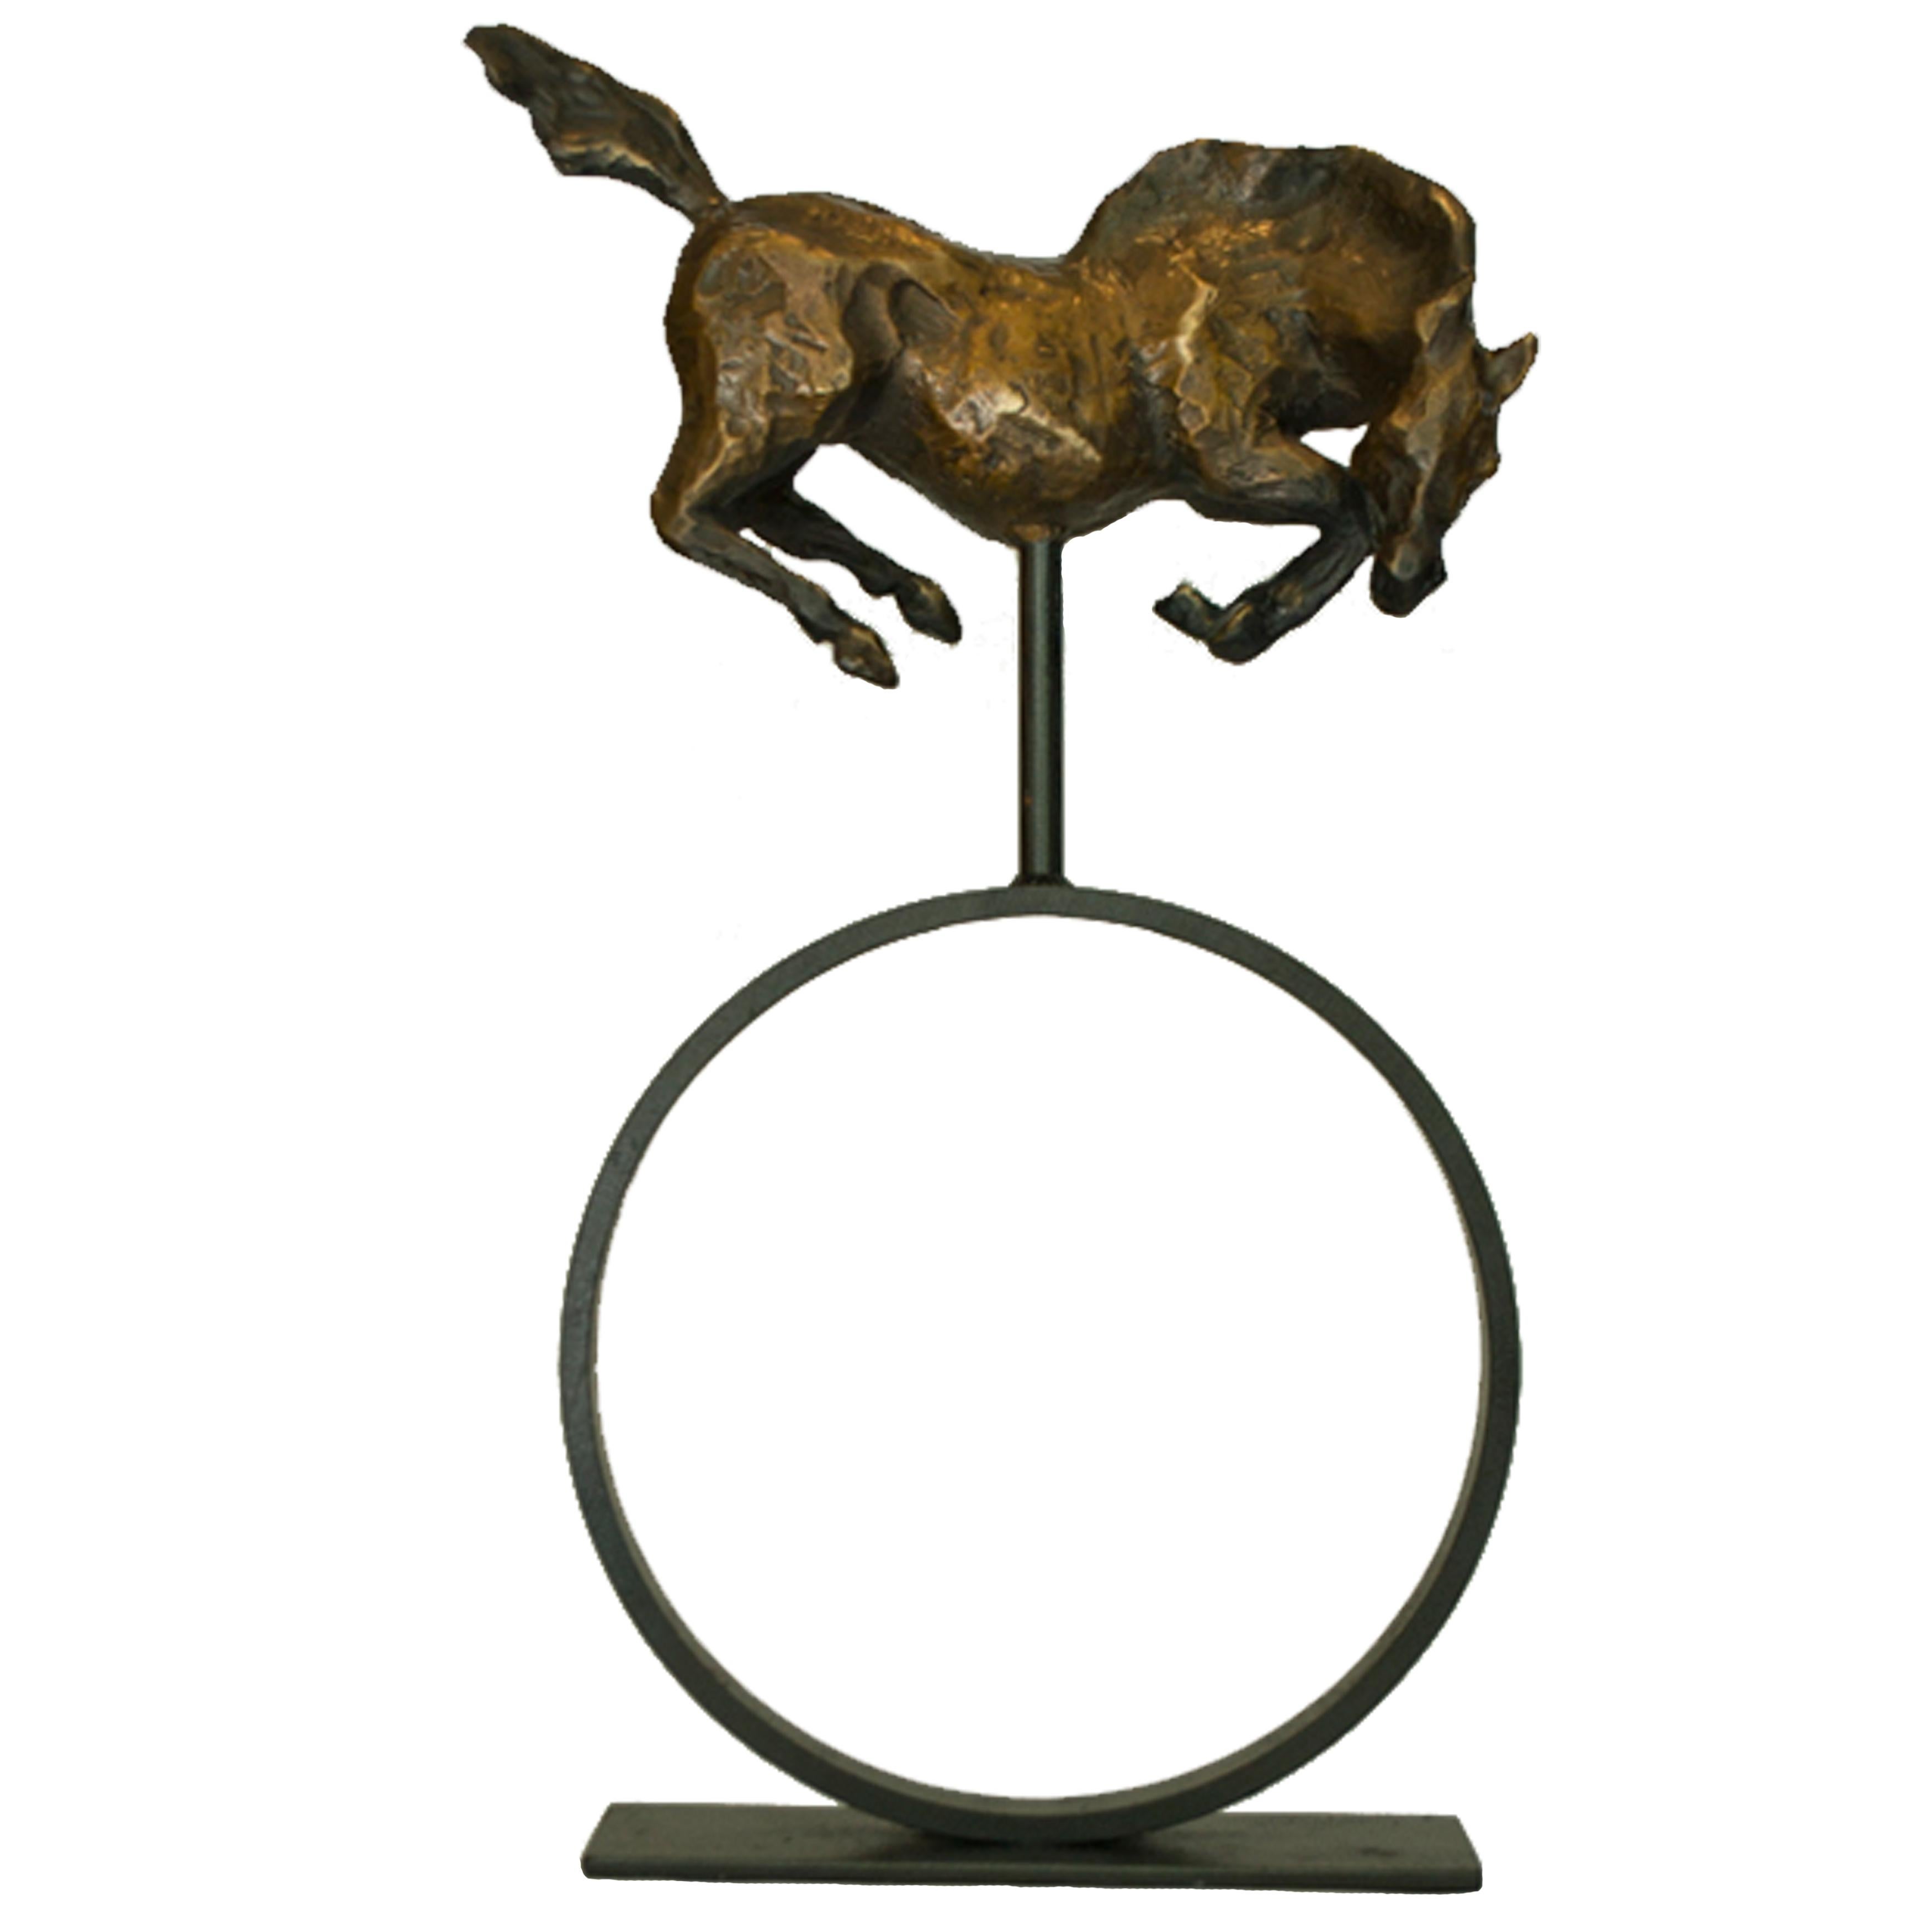 Giuseppe Palumbo Figurative Sculpture - Leaping Horse 24/50